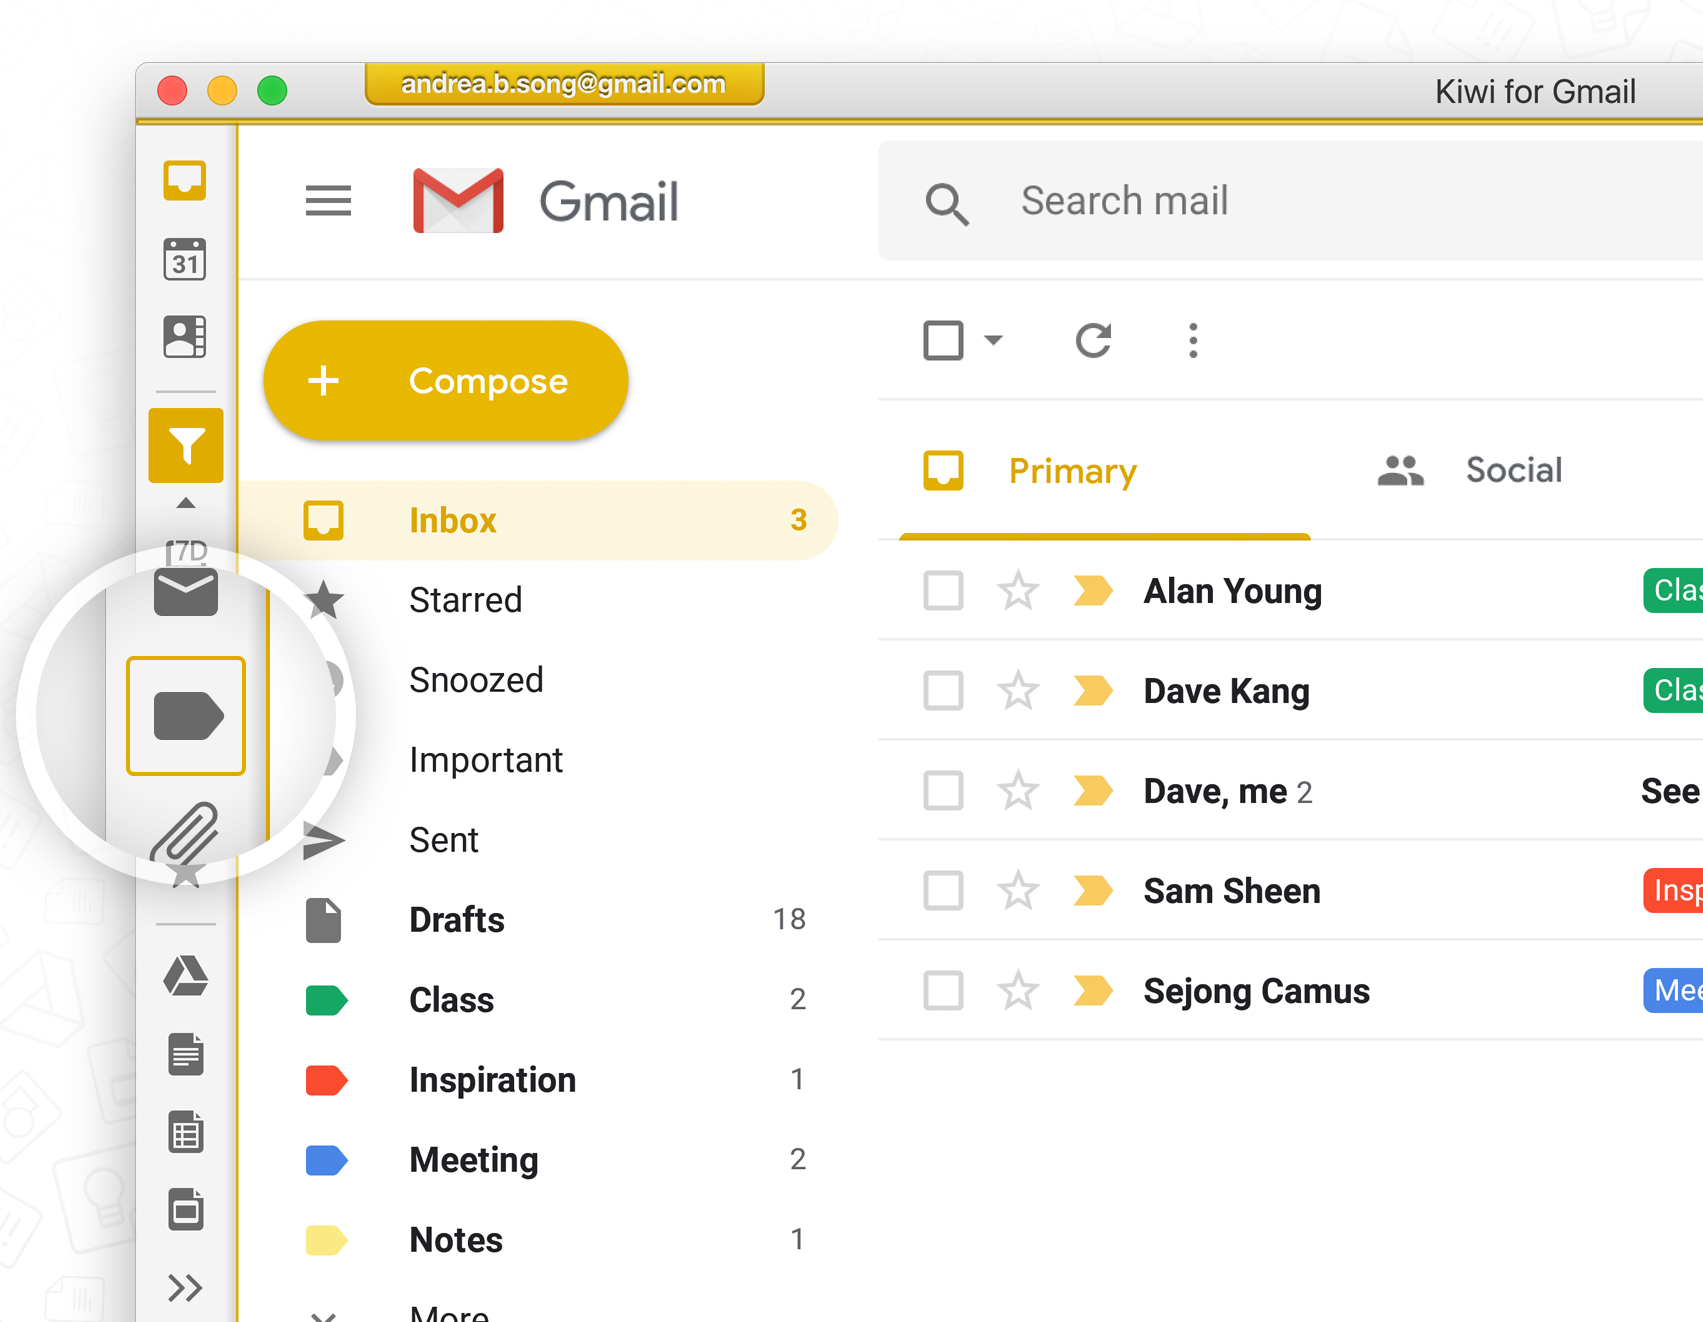 Kiwi for Gmail Software - Kiwi focused inbox